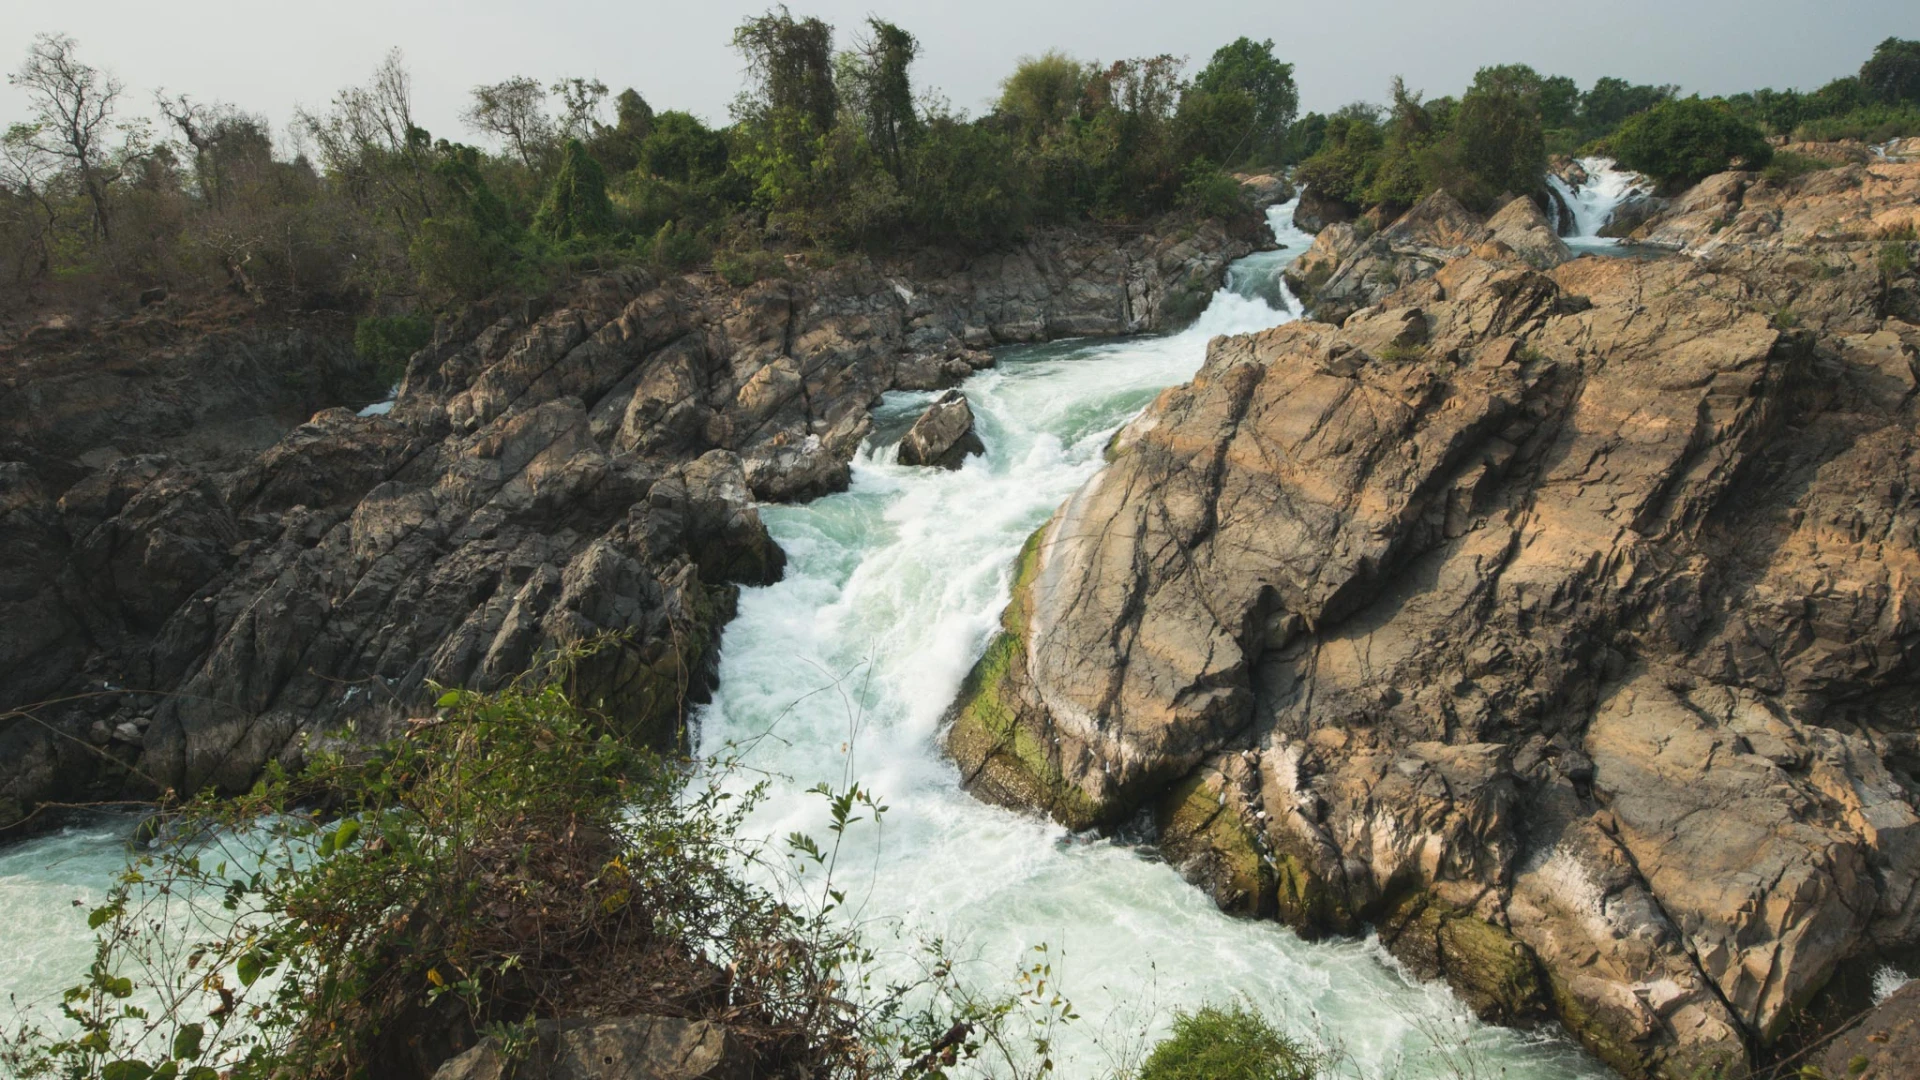 The Khon Pha Pheng Falls